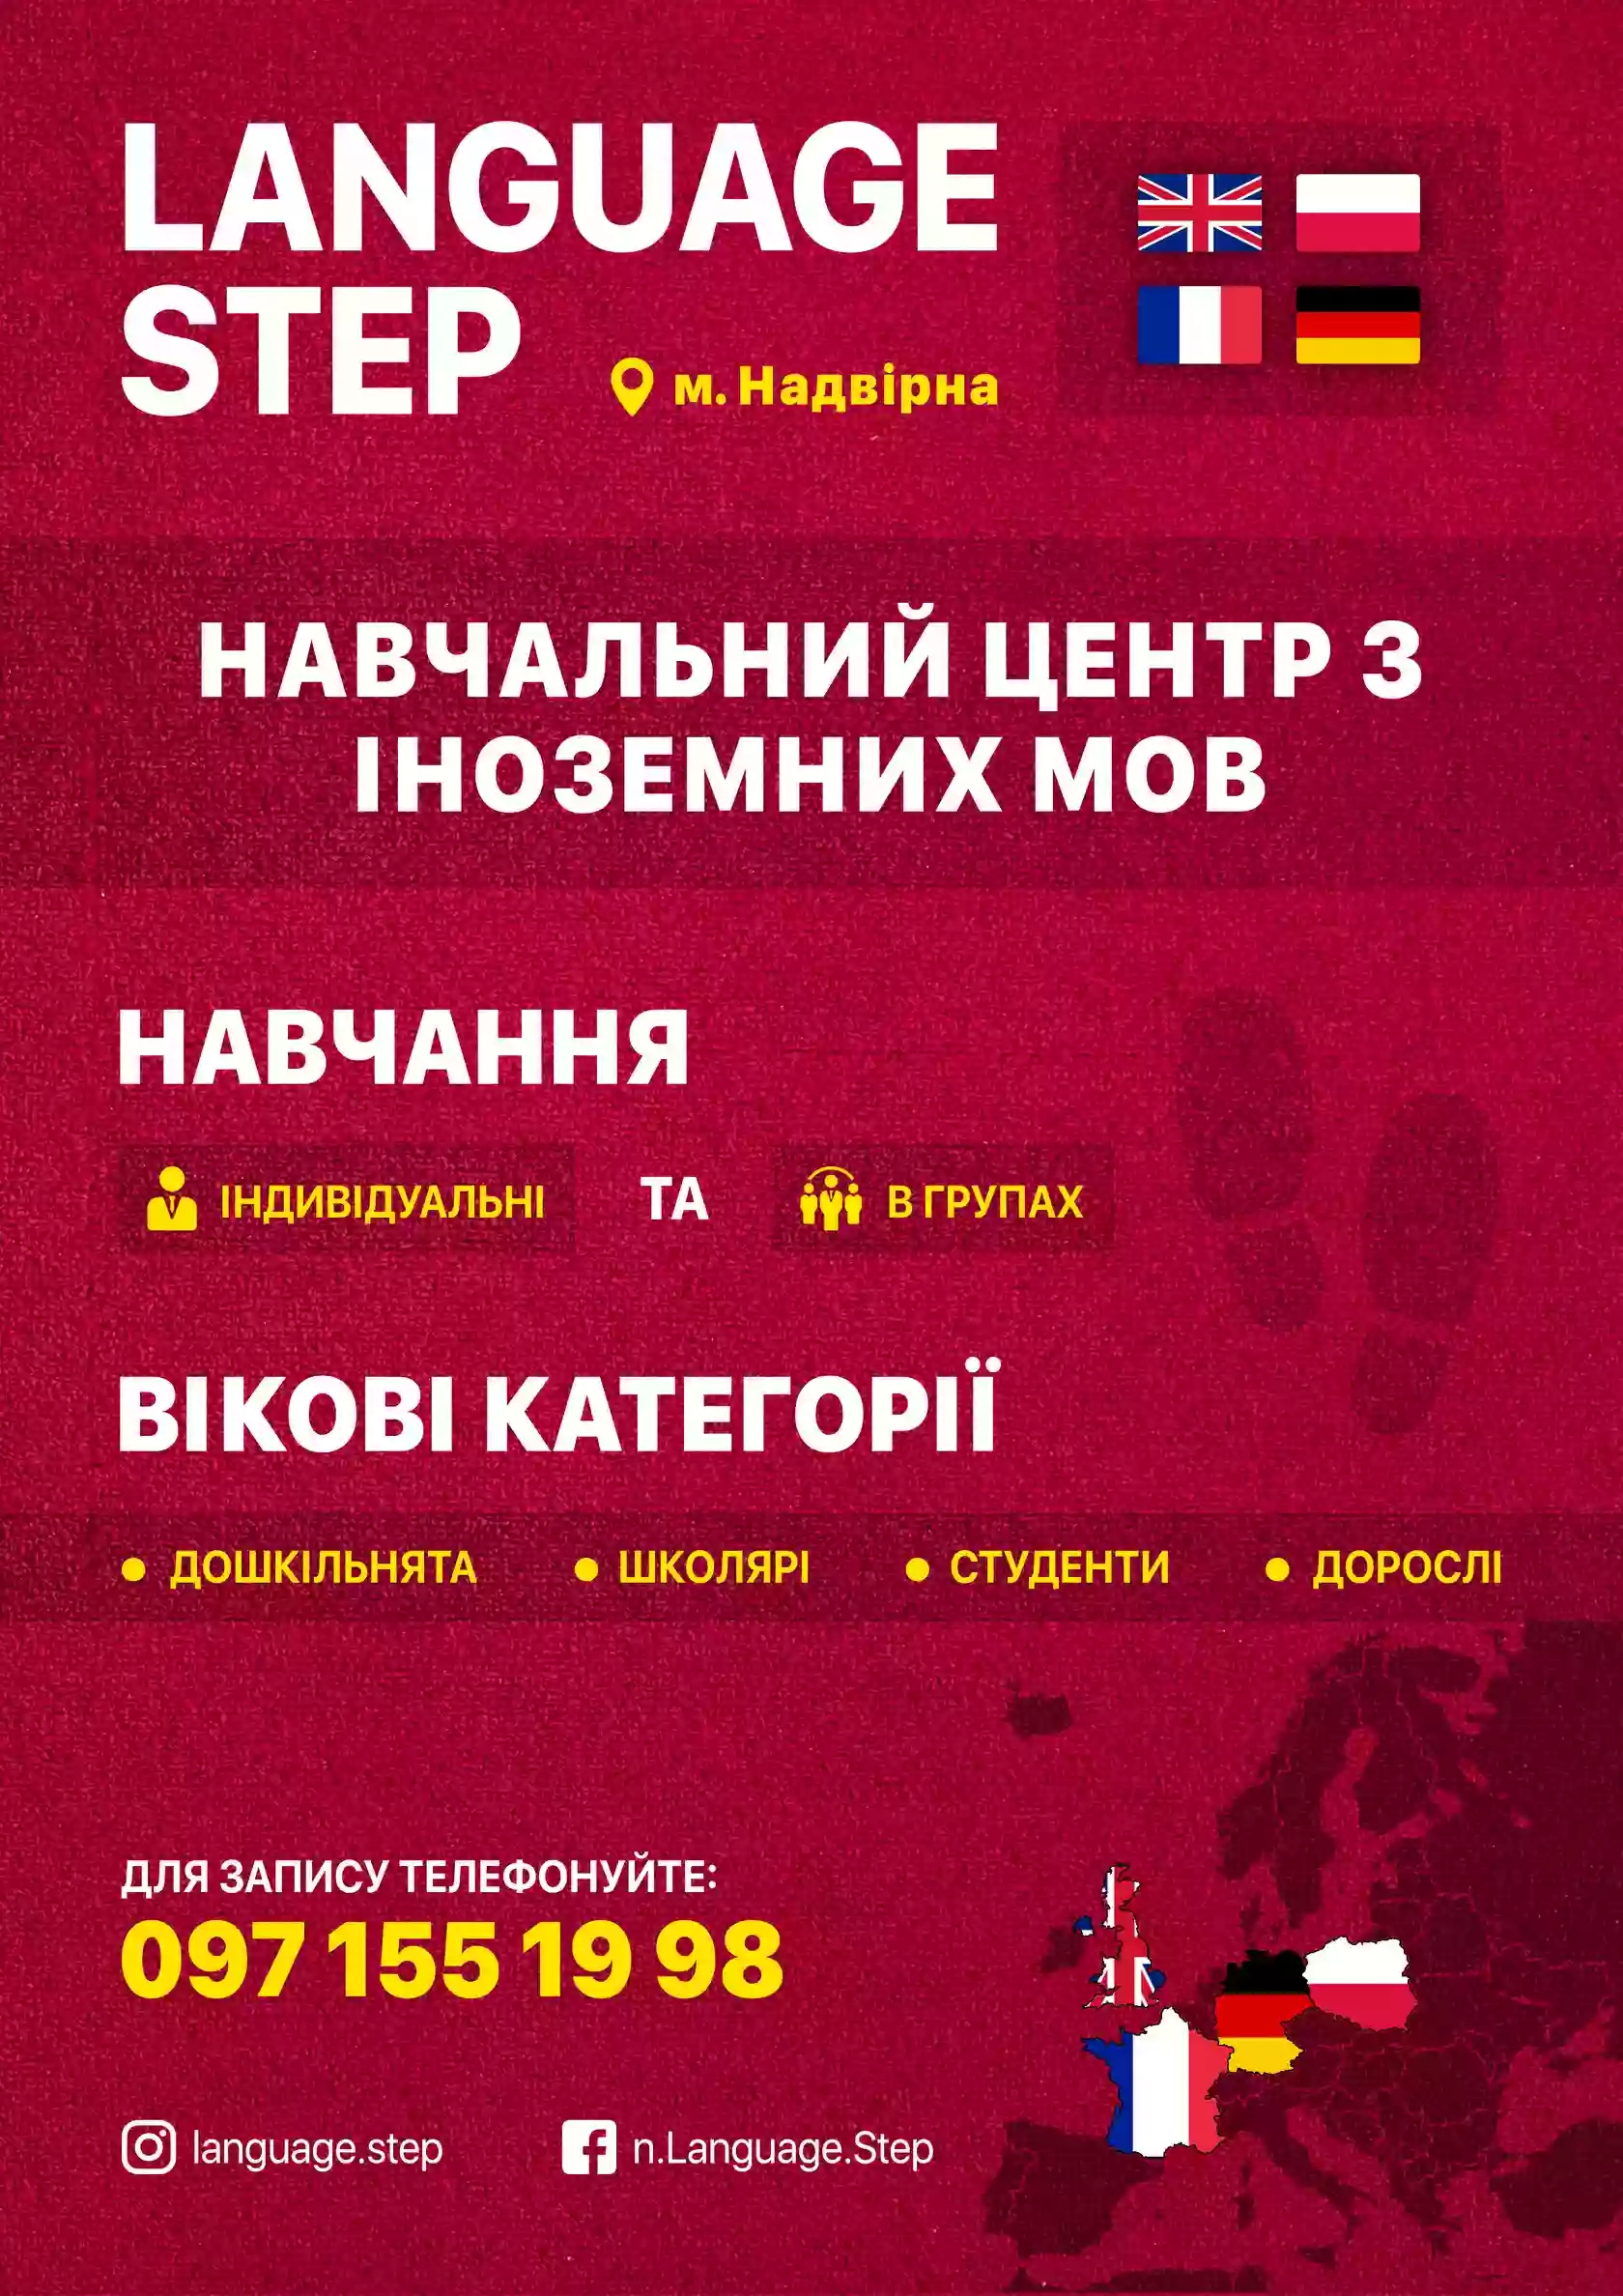 Language step